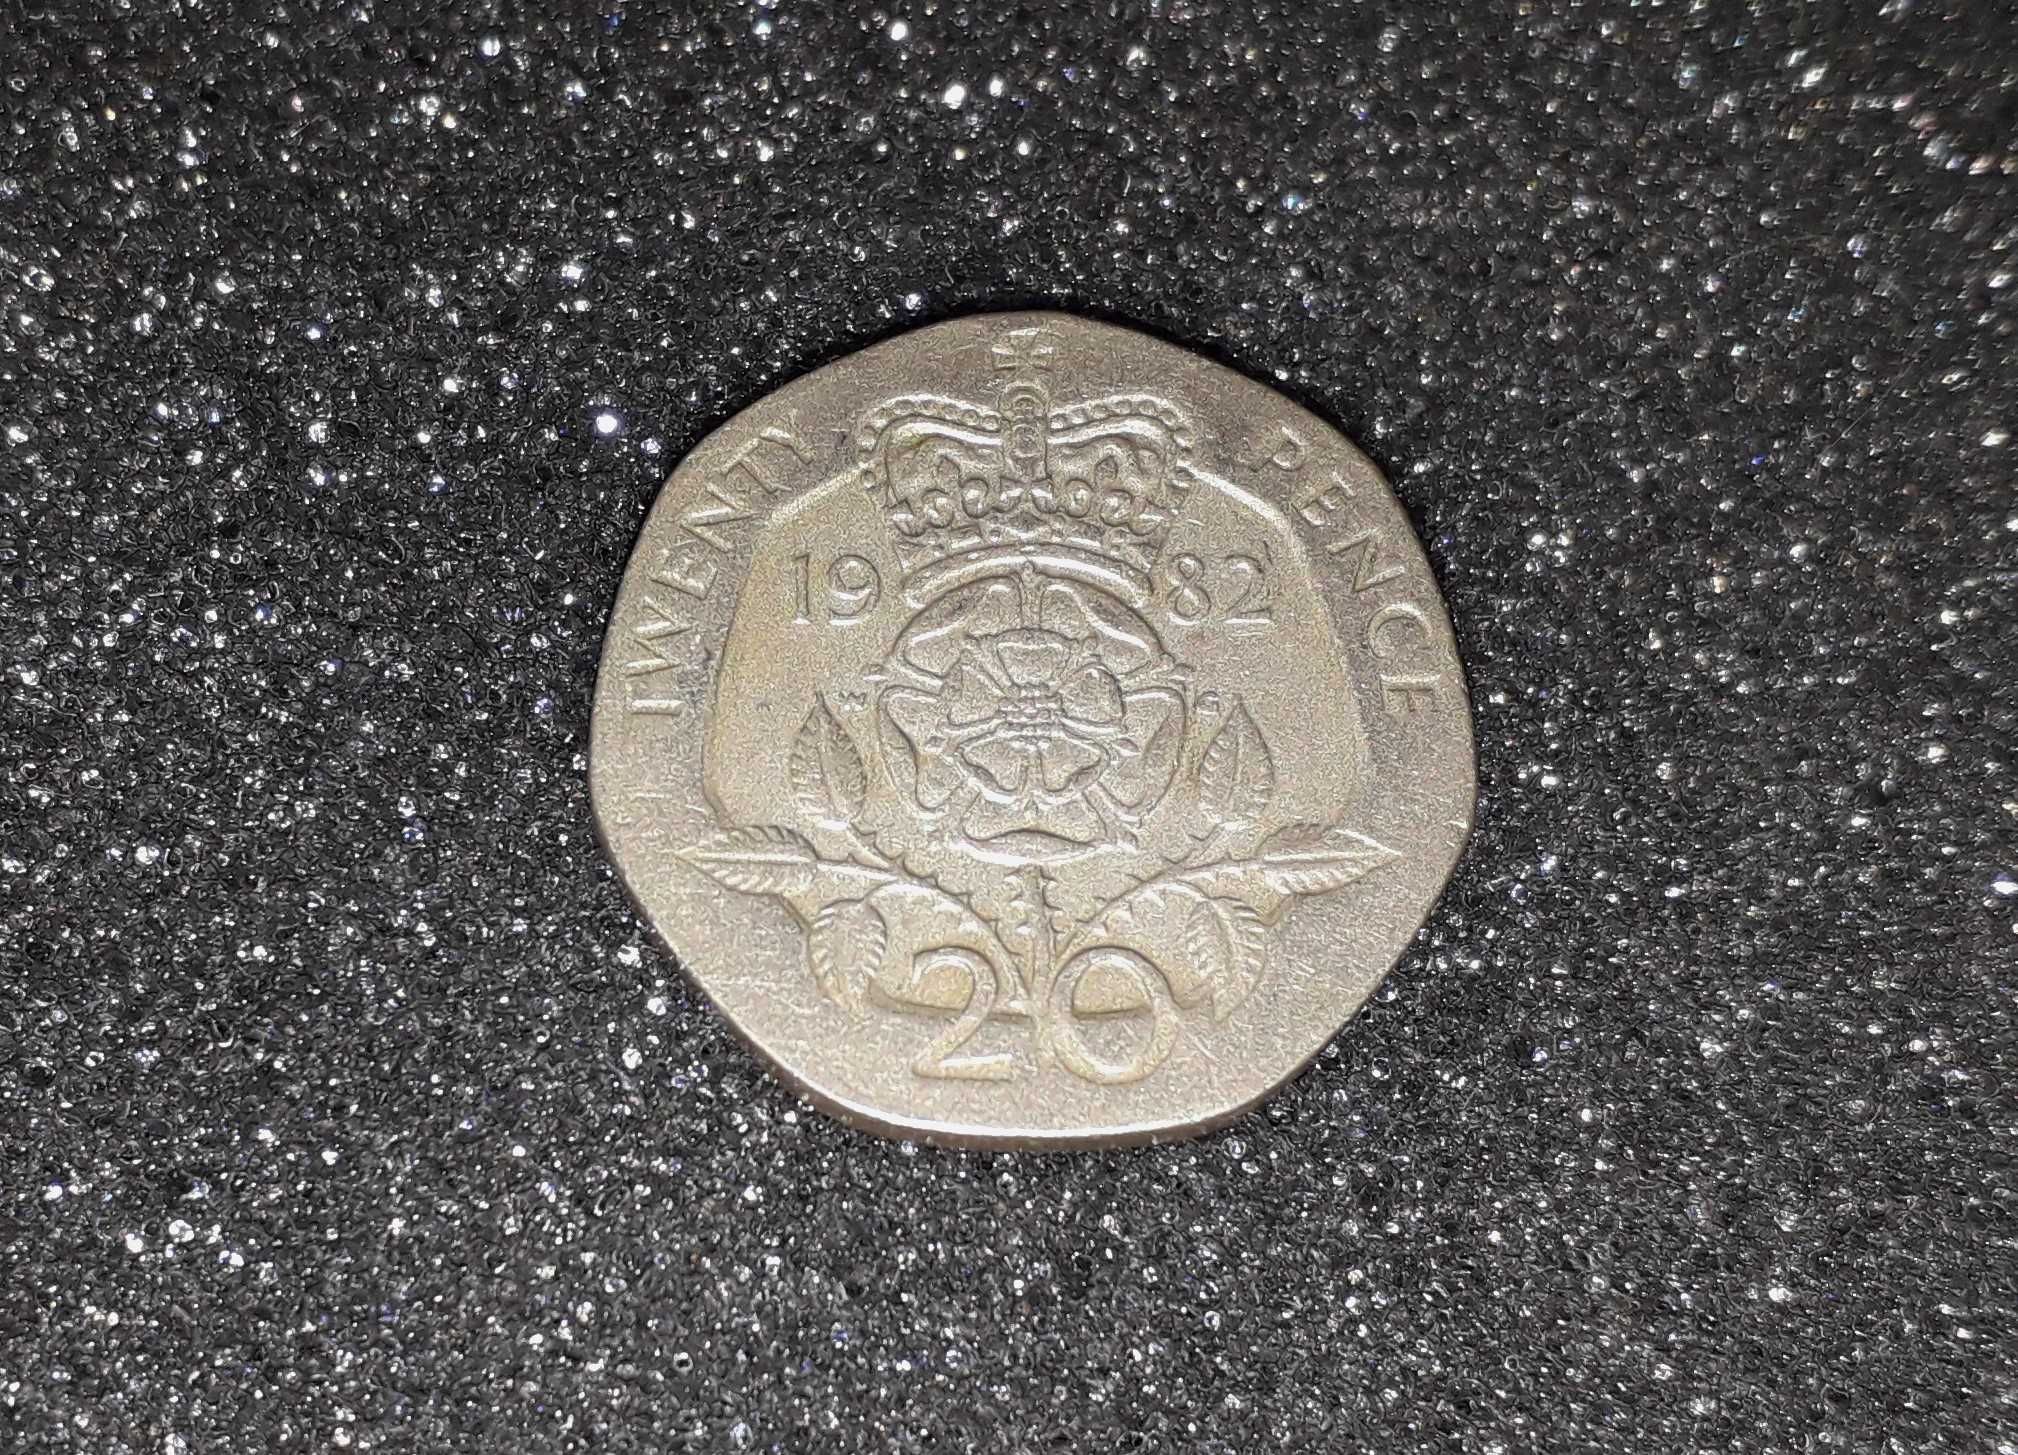 Монета ELIZABETH II D G REG F D 1982 г twenty pence Великобритания